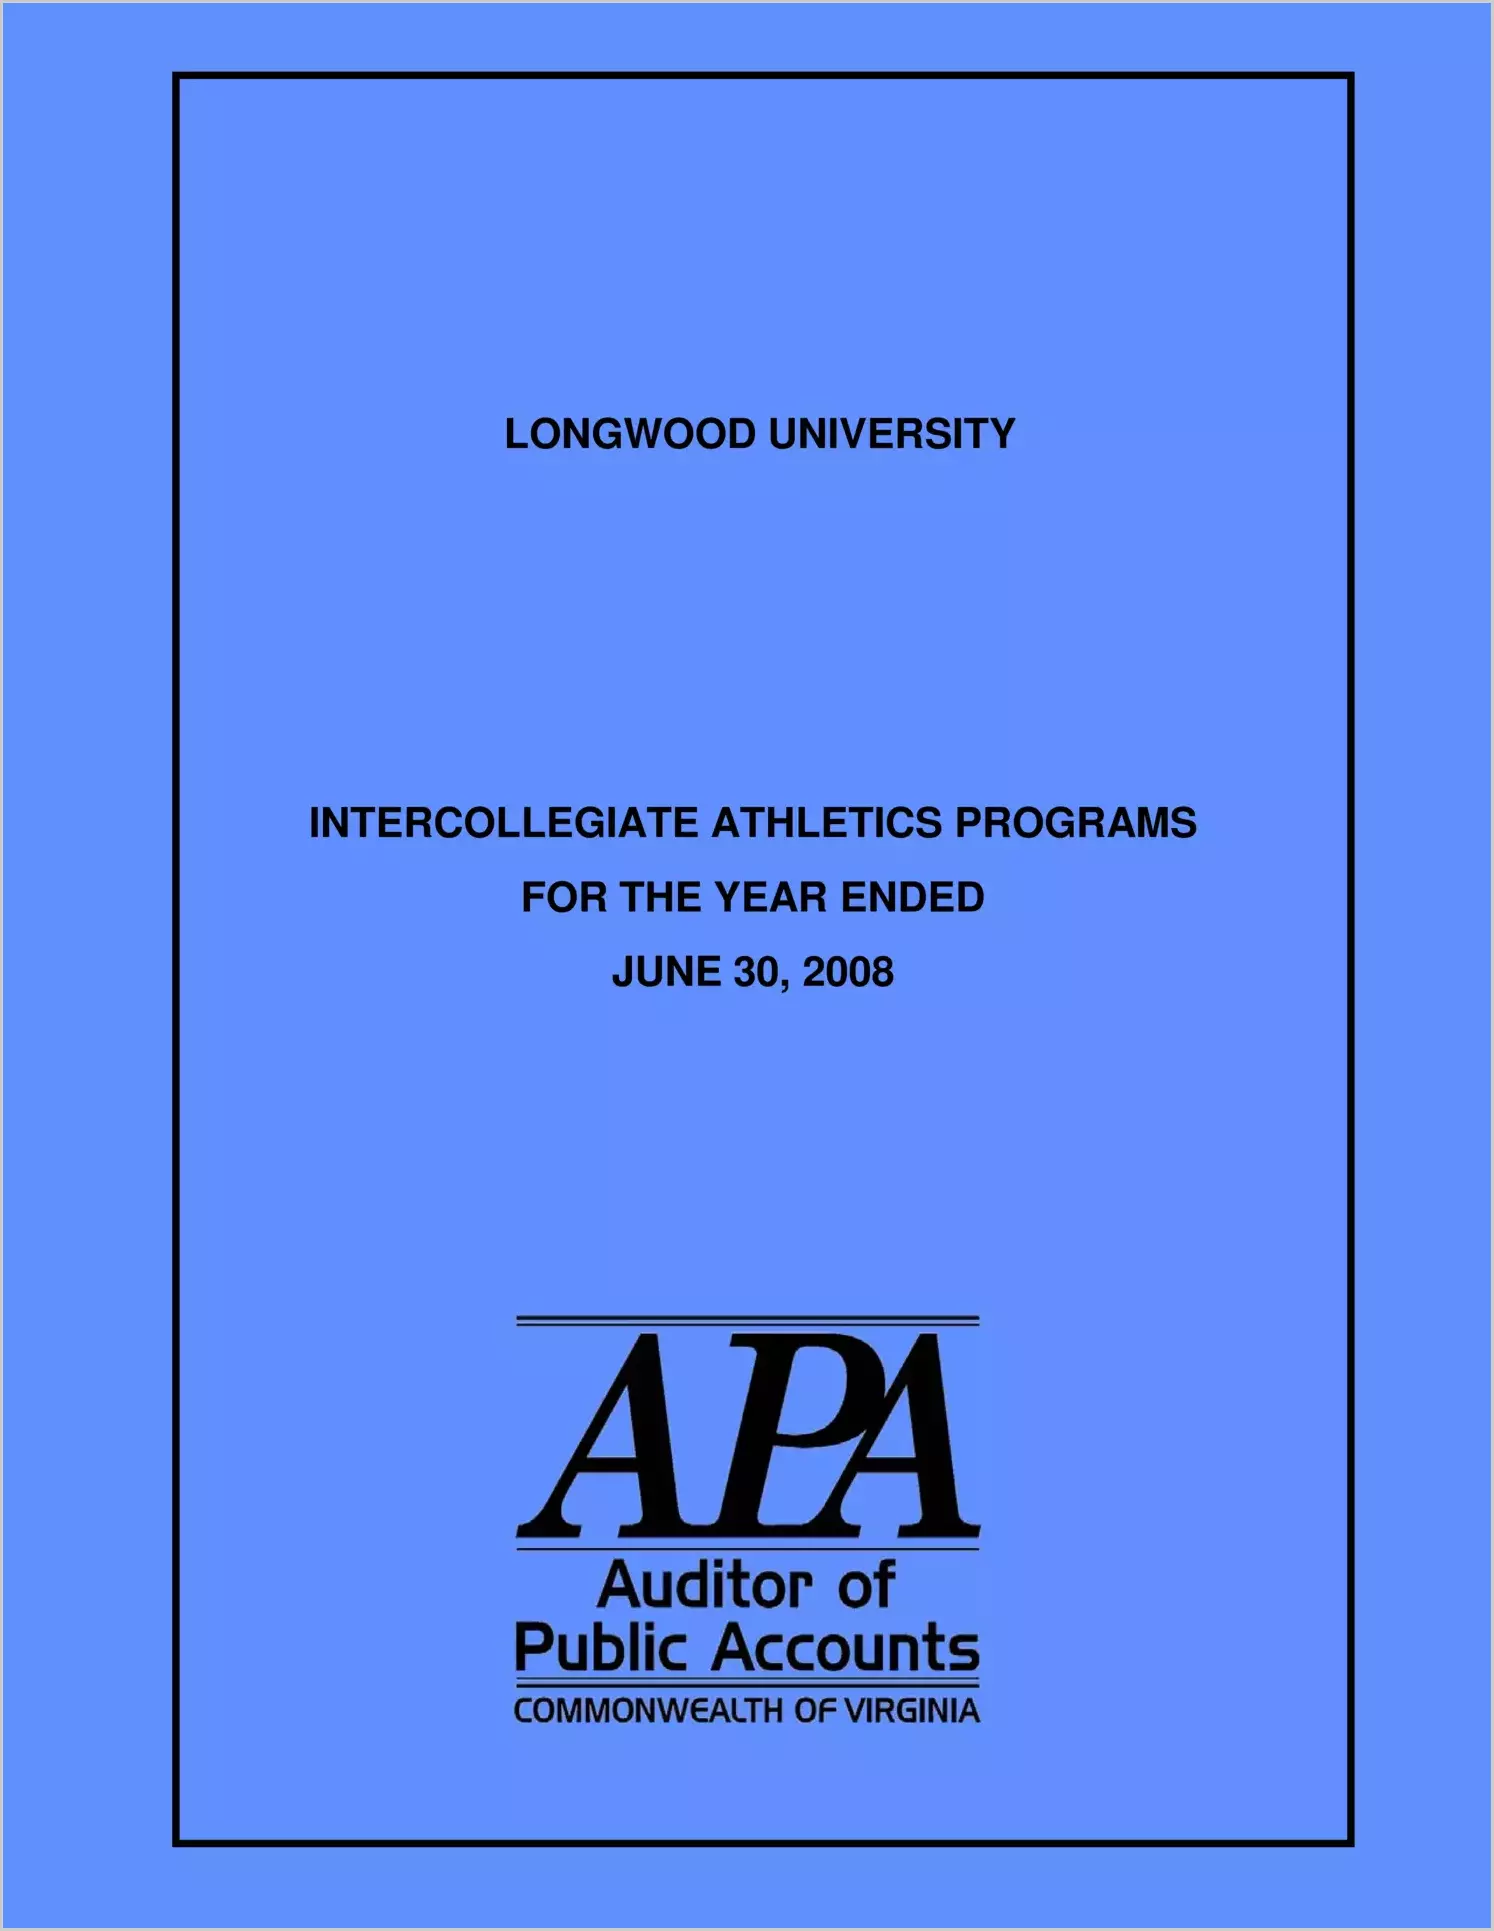 Longwood University Intercollegiate Athletics Programs for the year ended June 30, 2008